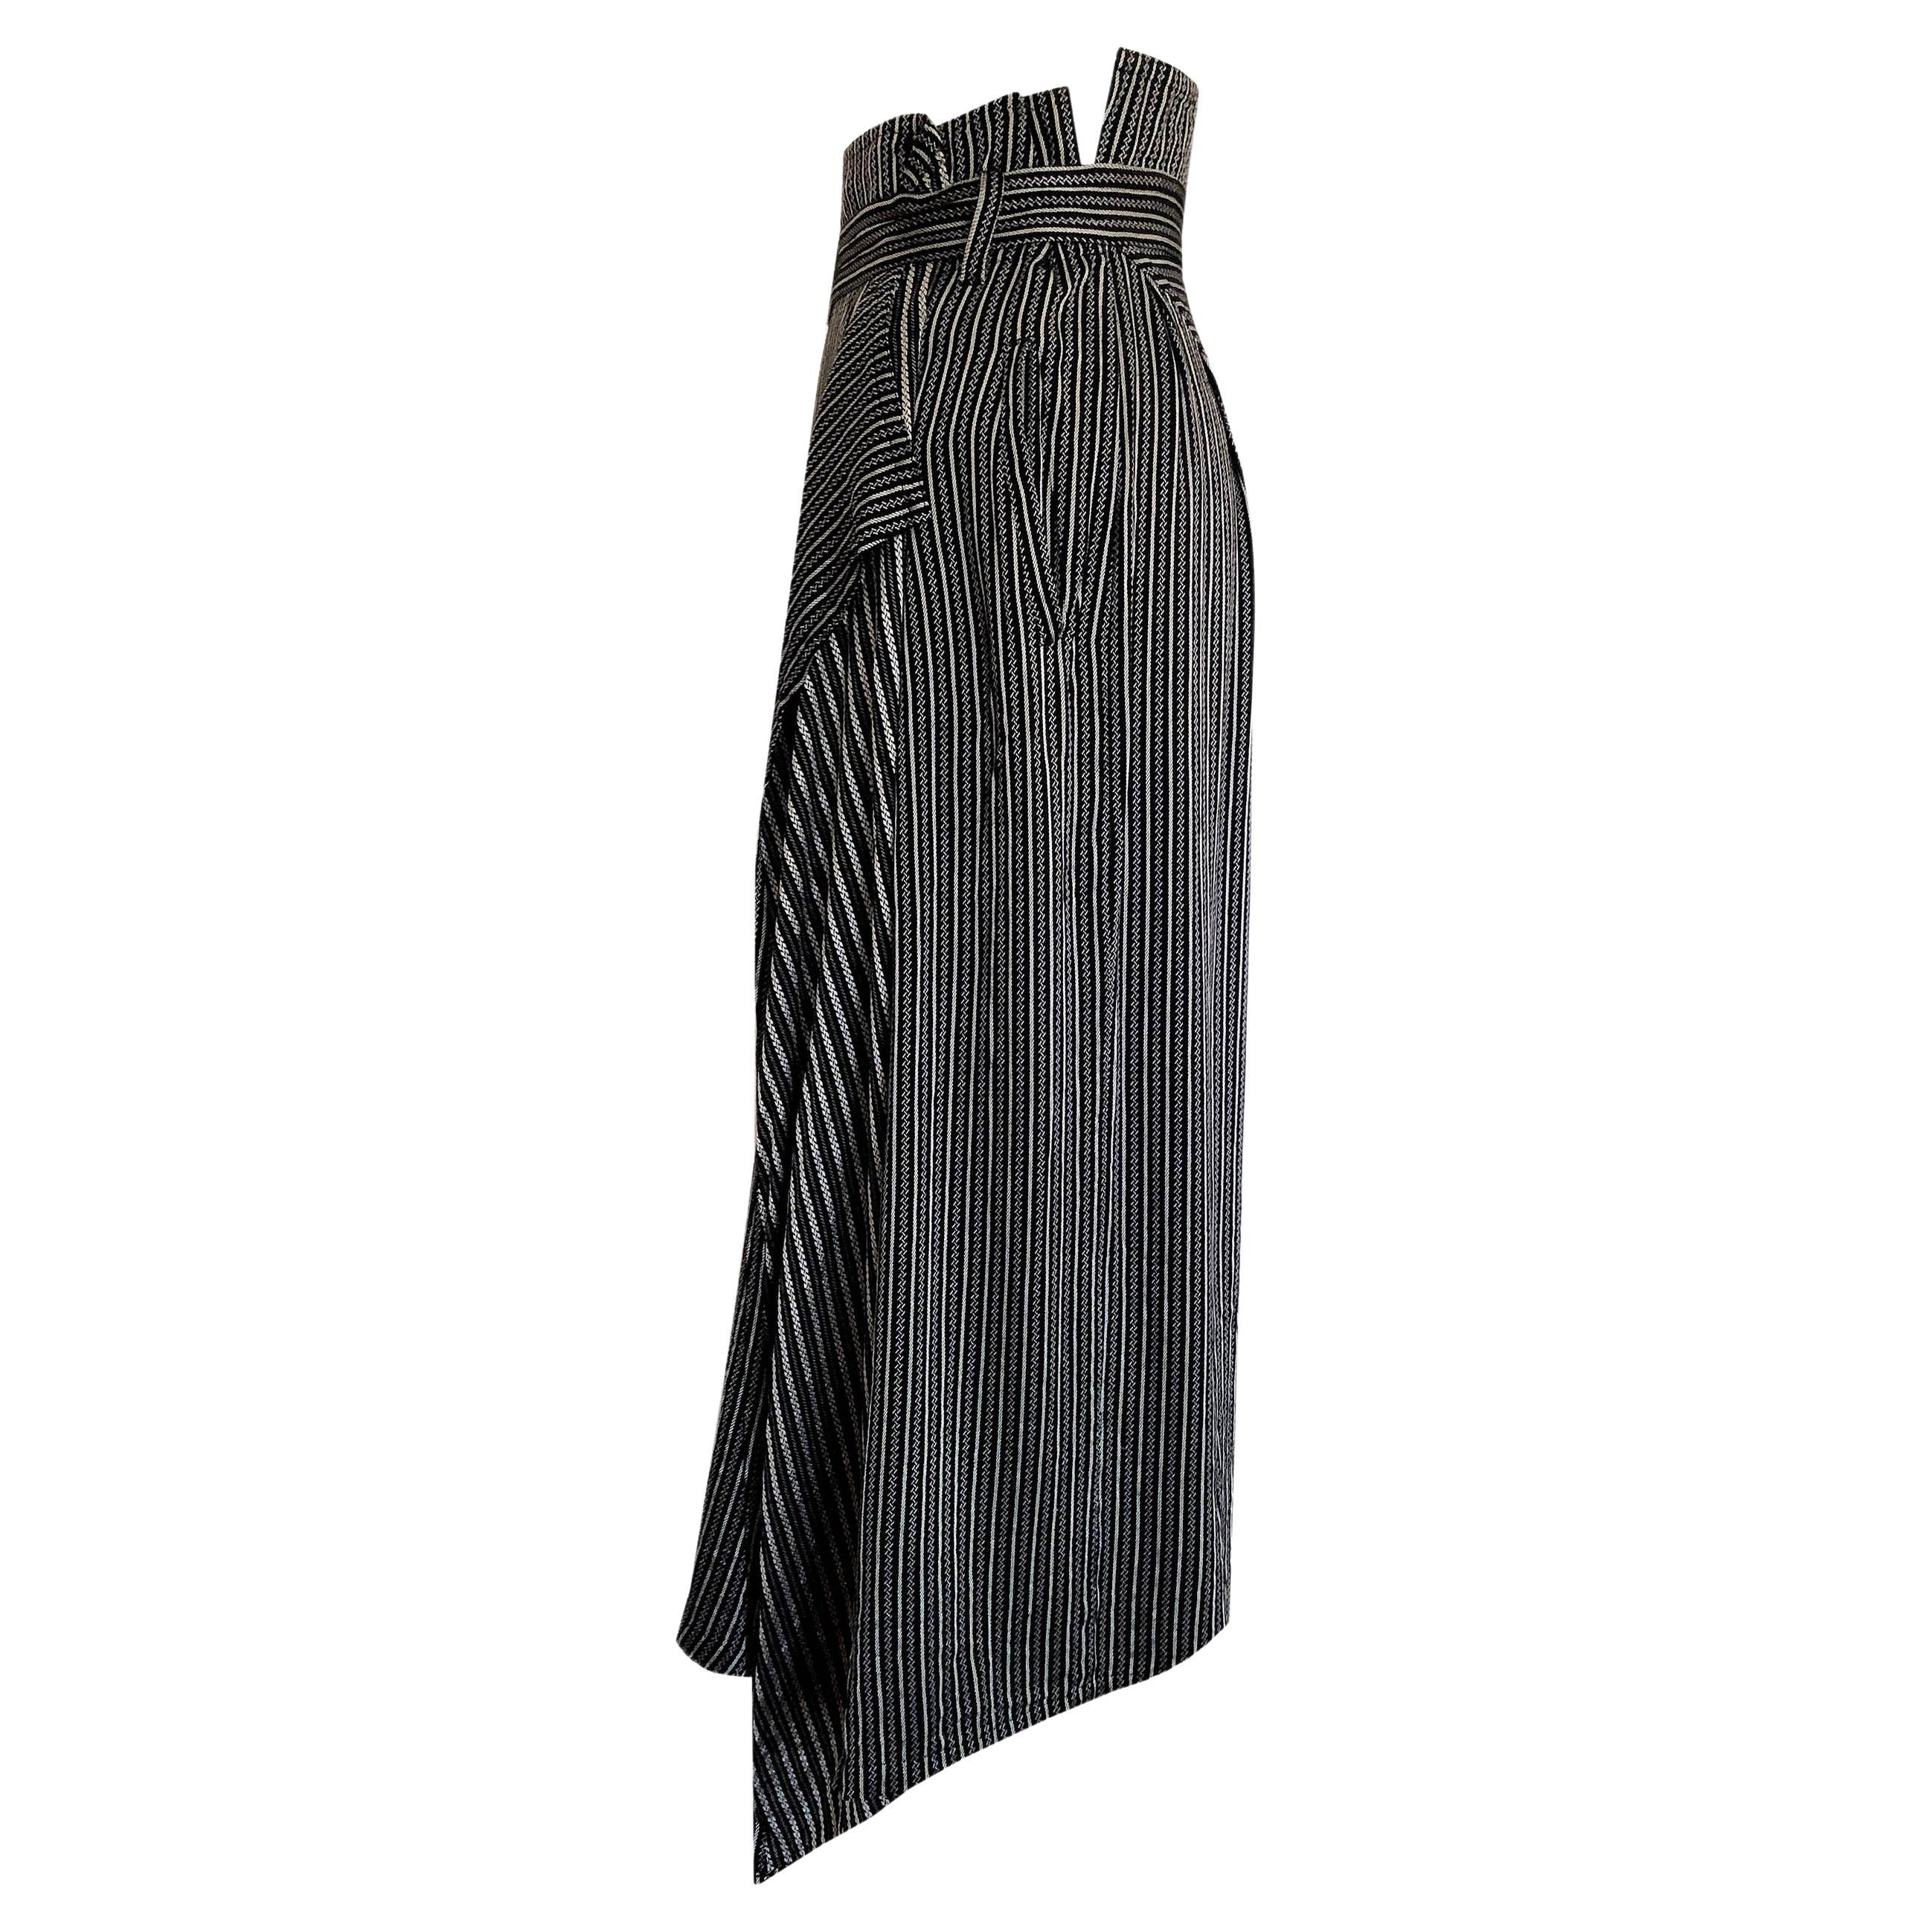 Kansai Yamamoto Skirt - 1980s Vintage - Asymmetric - High Waisted - Wrap Skirt For Sale